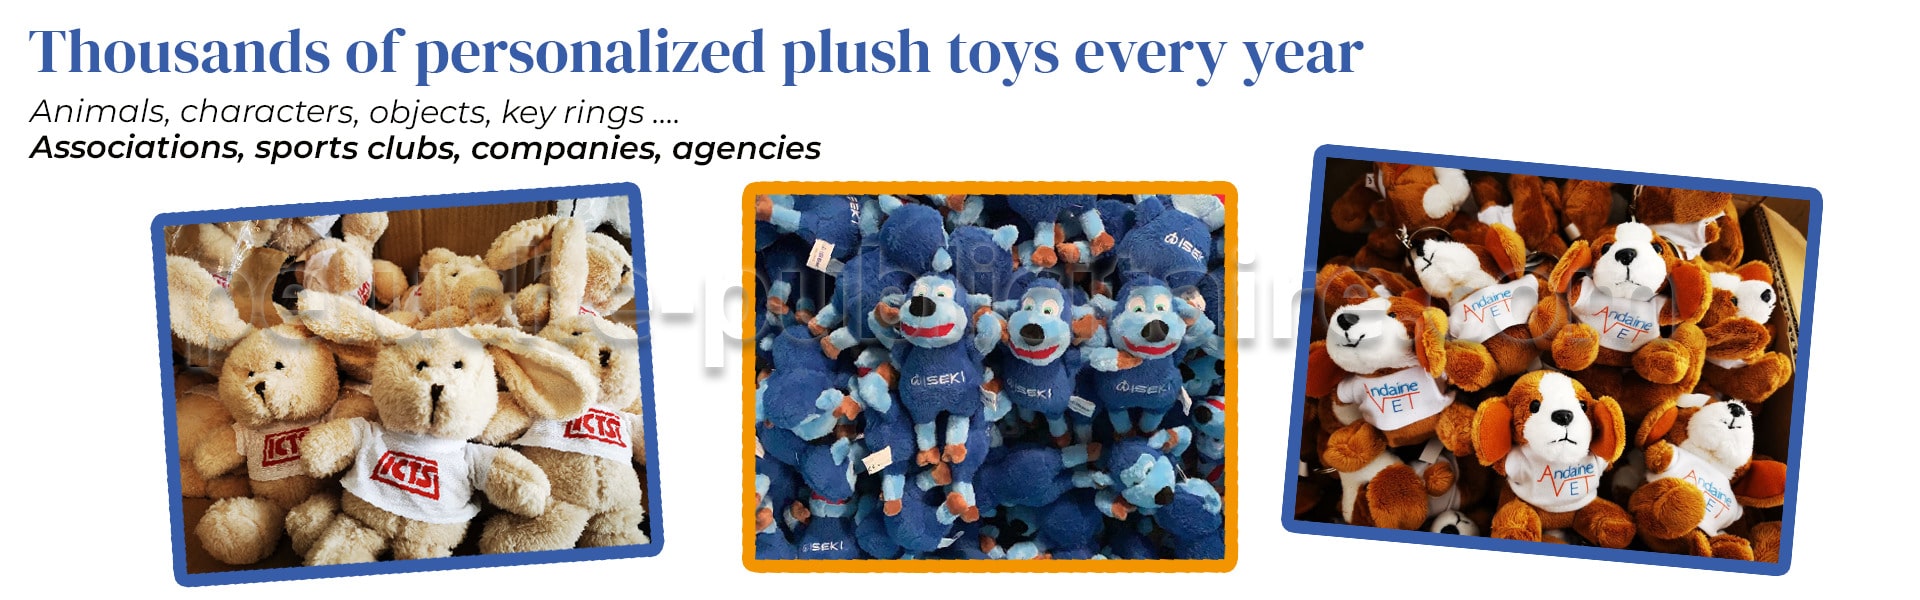 Plush toys to personalize